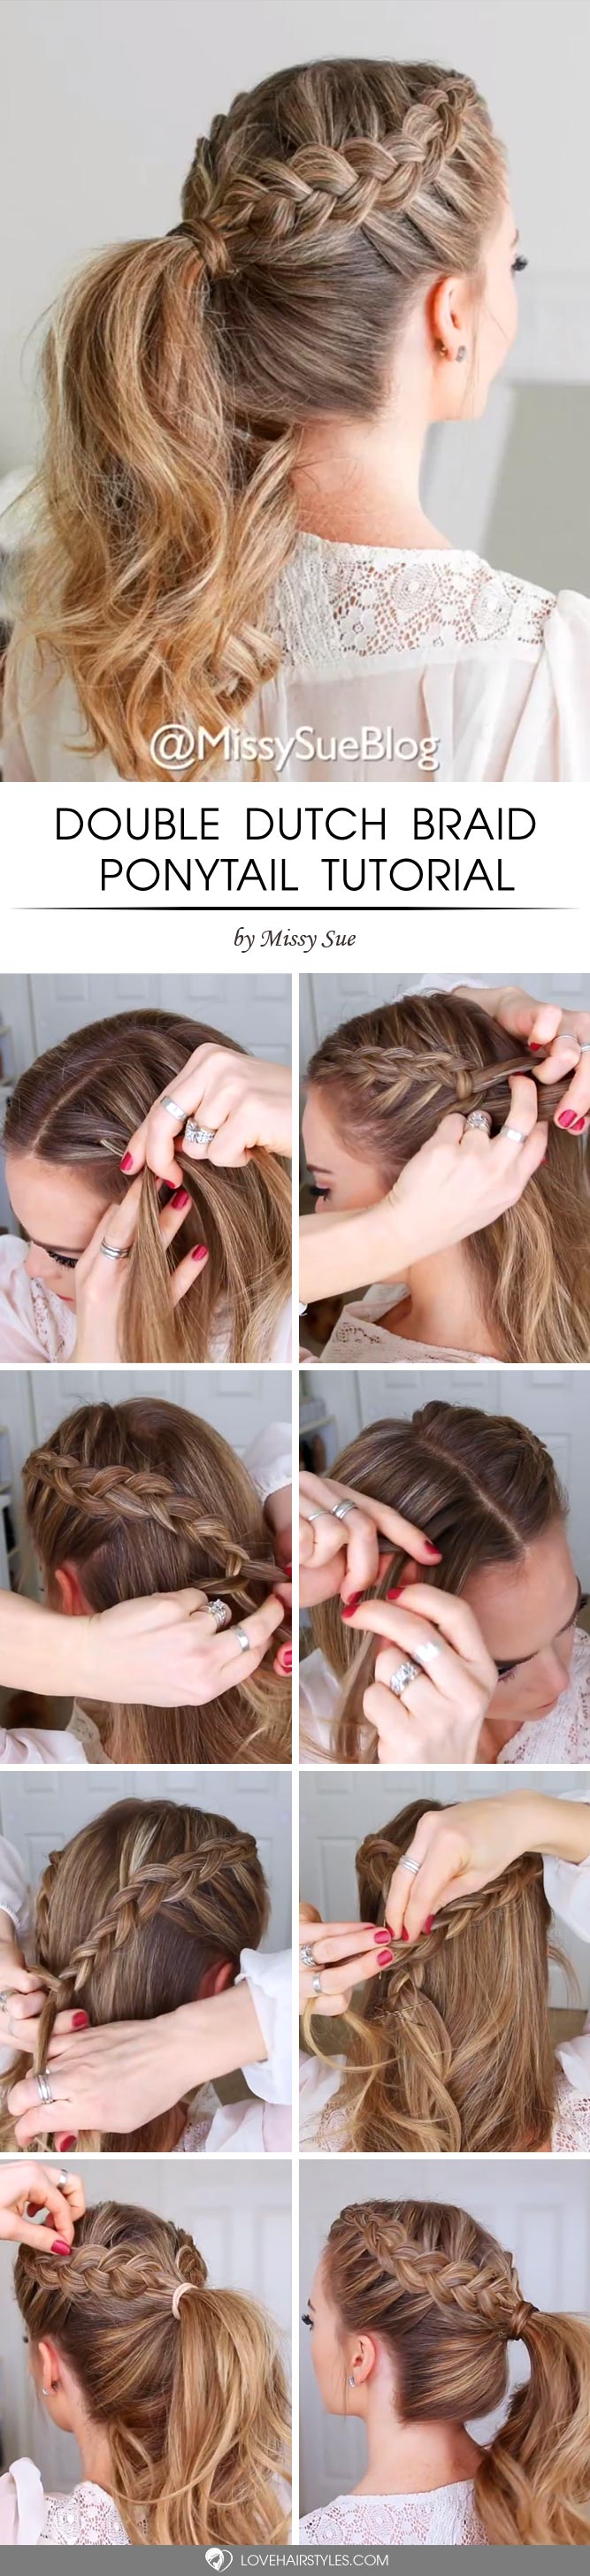 Double Dutch Braid Ponytail Tutorial #howtodutchbraid #dutchbraid #tutorials #braids #hairstyles